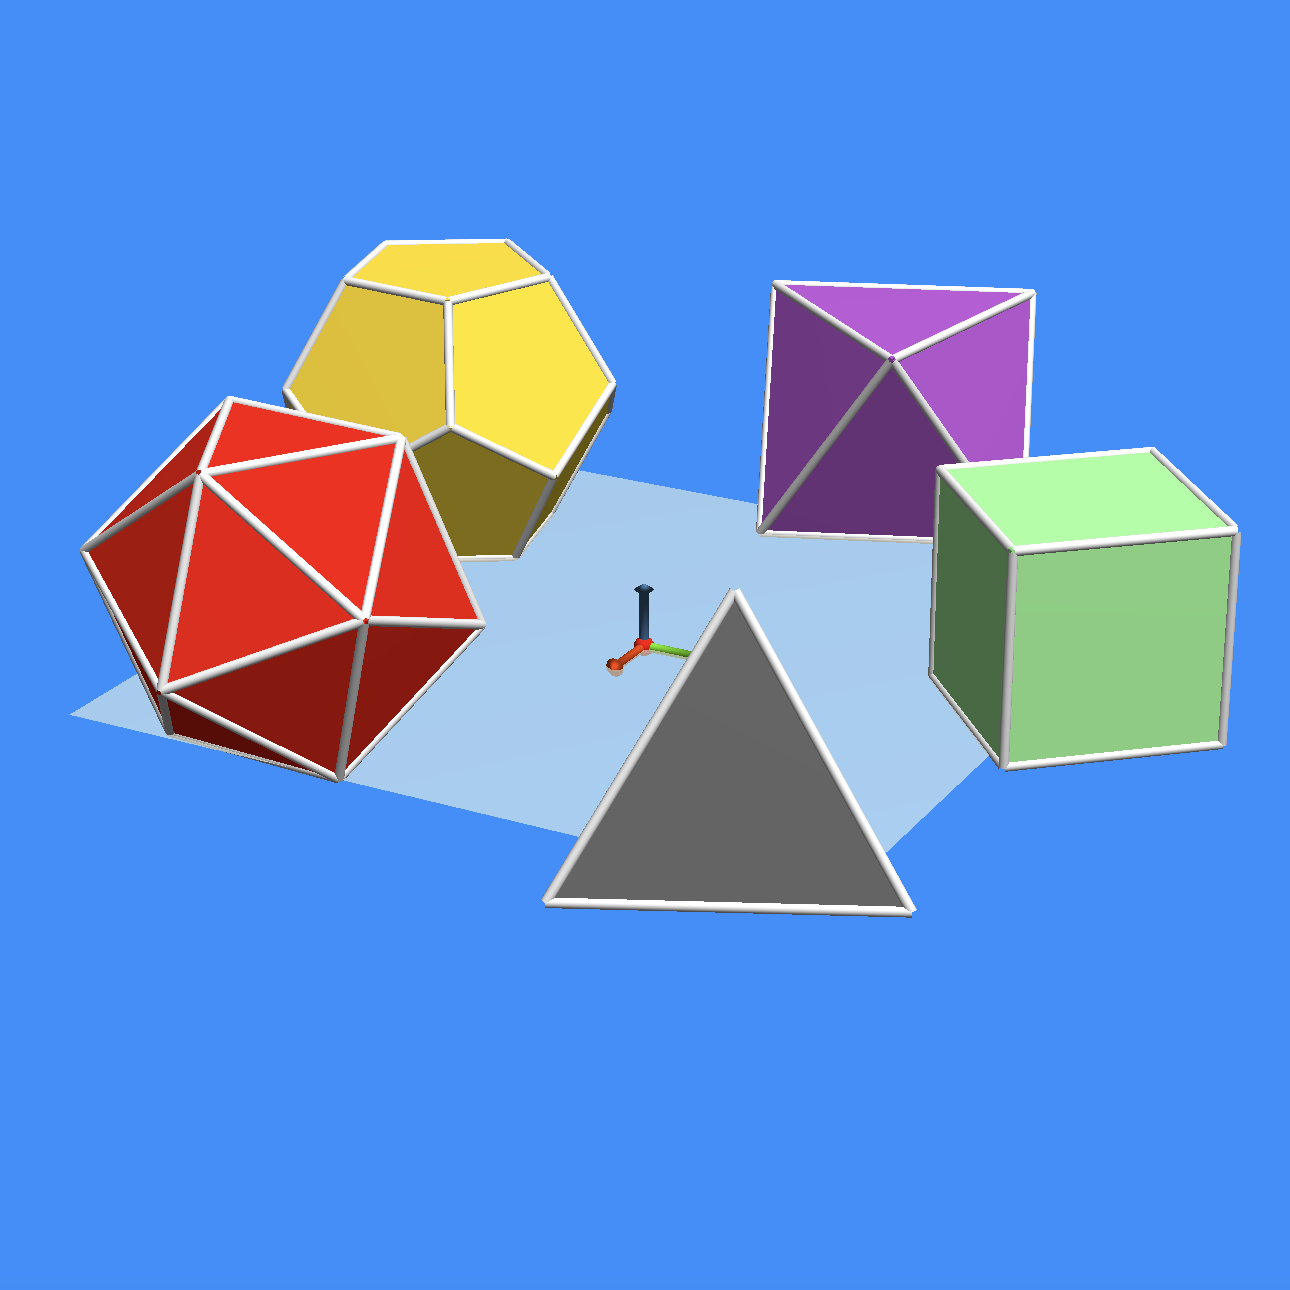 The five Platonic solids